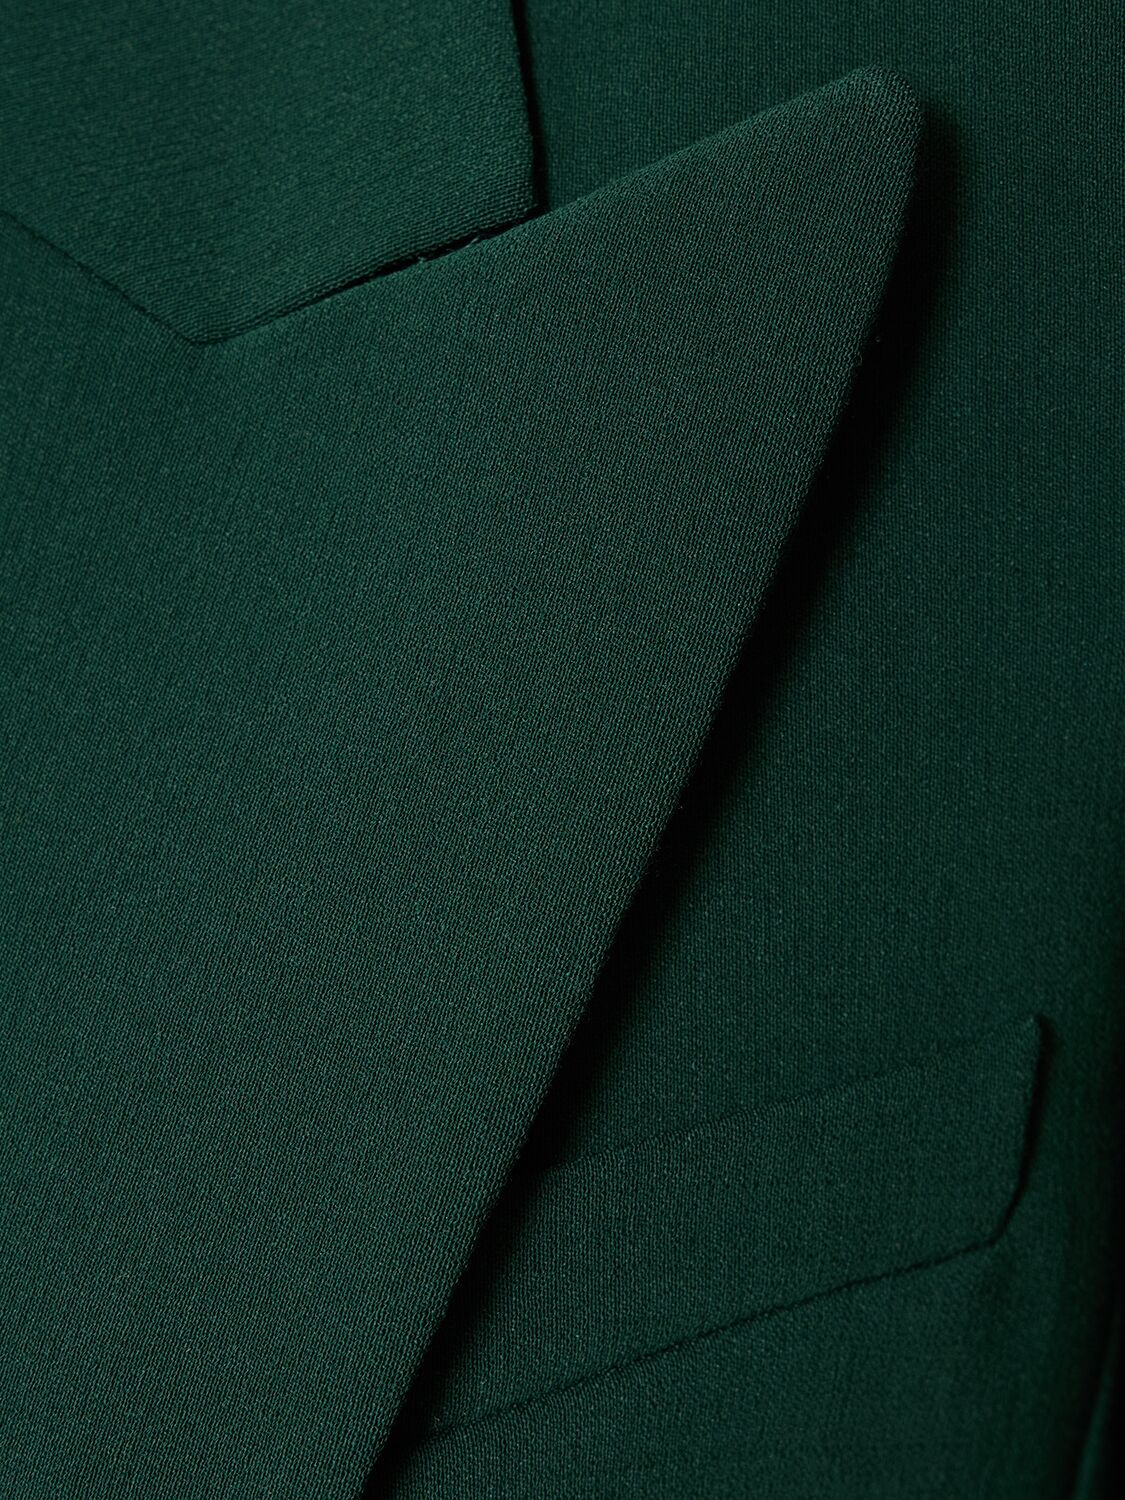 Shop Michael Kors Georgina Single Breast Wool Crepe Jacket In Dark Green